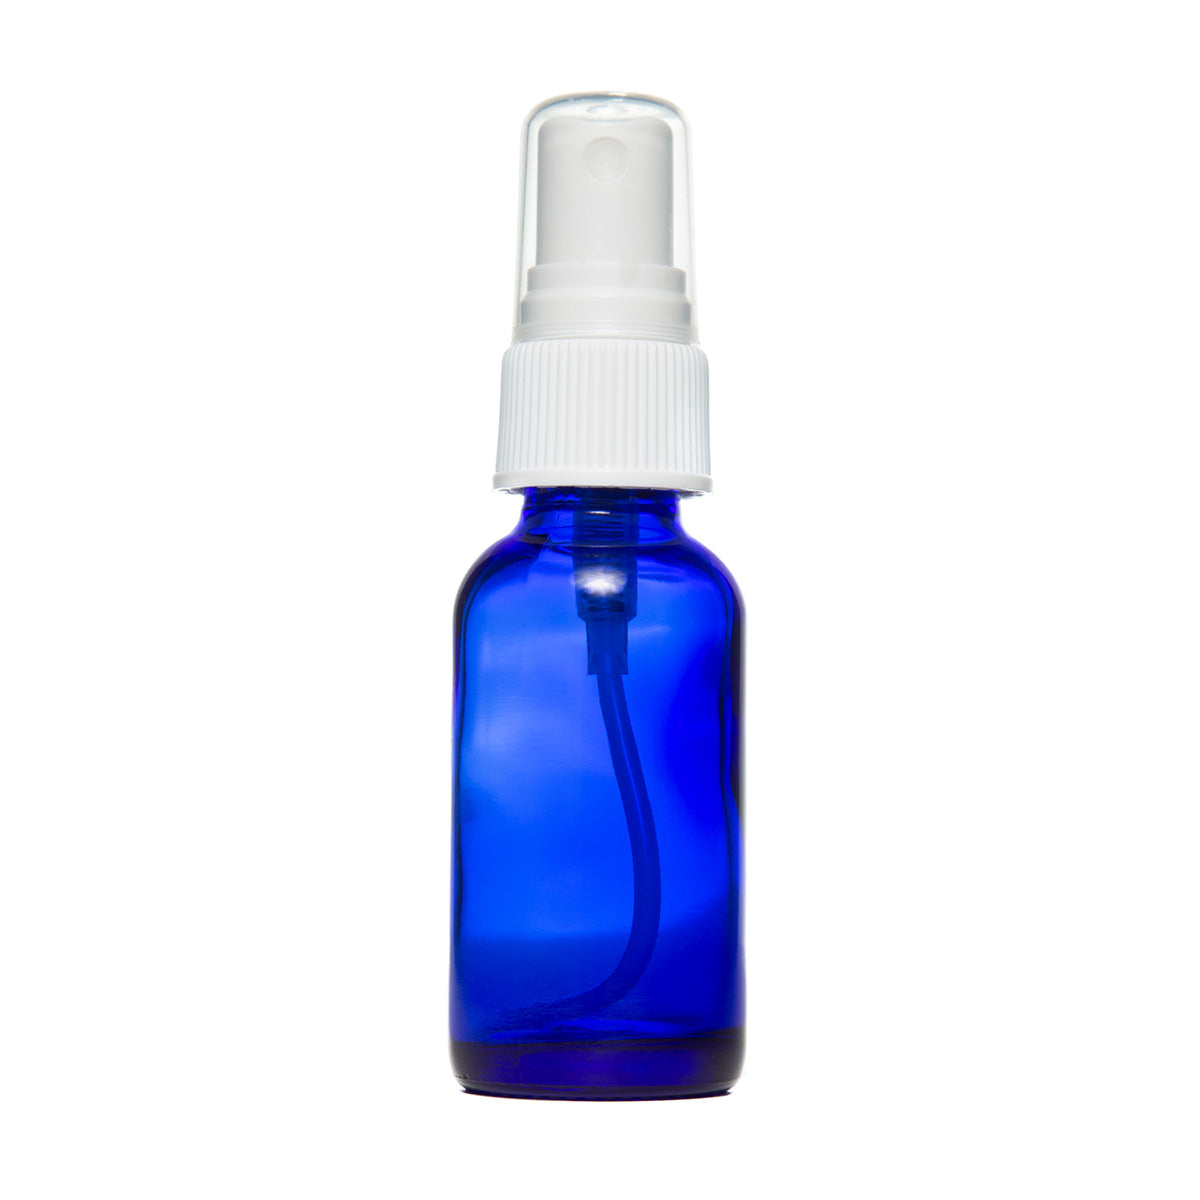 Blue Bottle Spray Top 1 oz